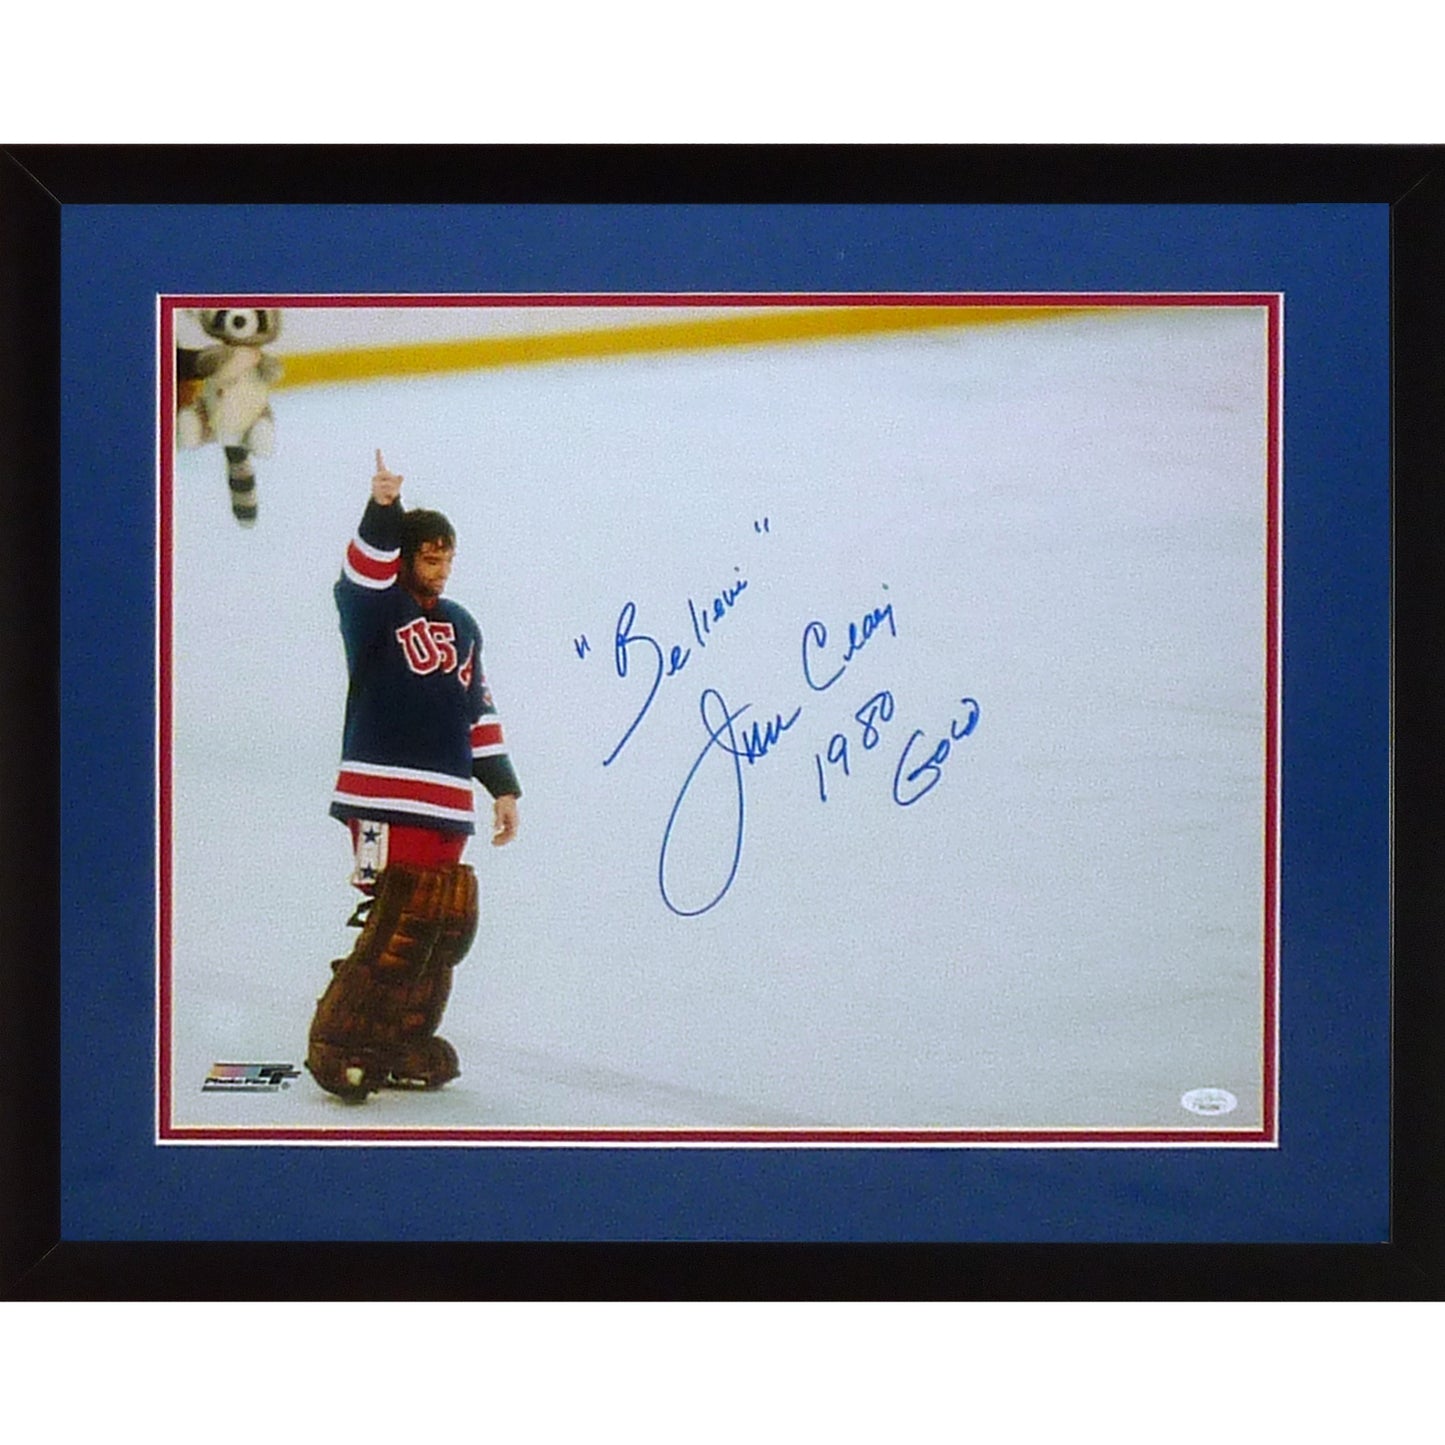 Jim Craig Autographed 1980 U.S. Olympic Hockey Celebration Deluxe Framed 16x20 Photo w/ "Believe", "1980 Gold" Inscr. - Beckett